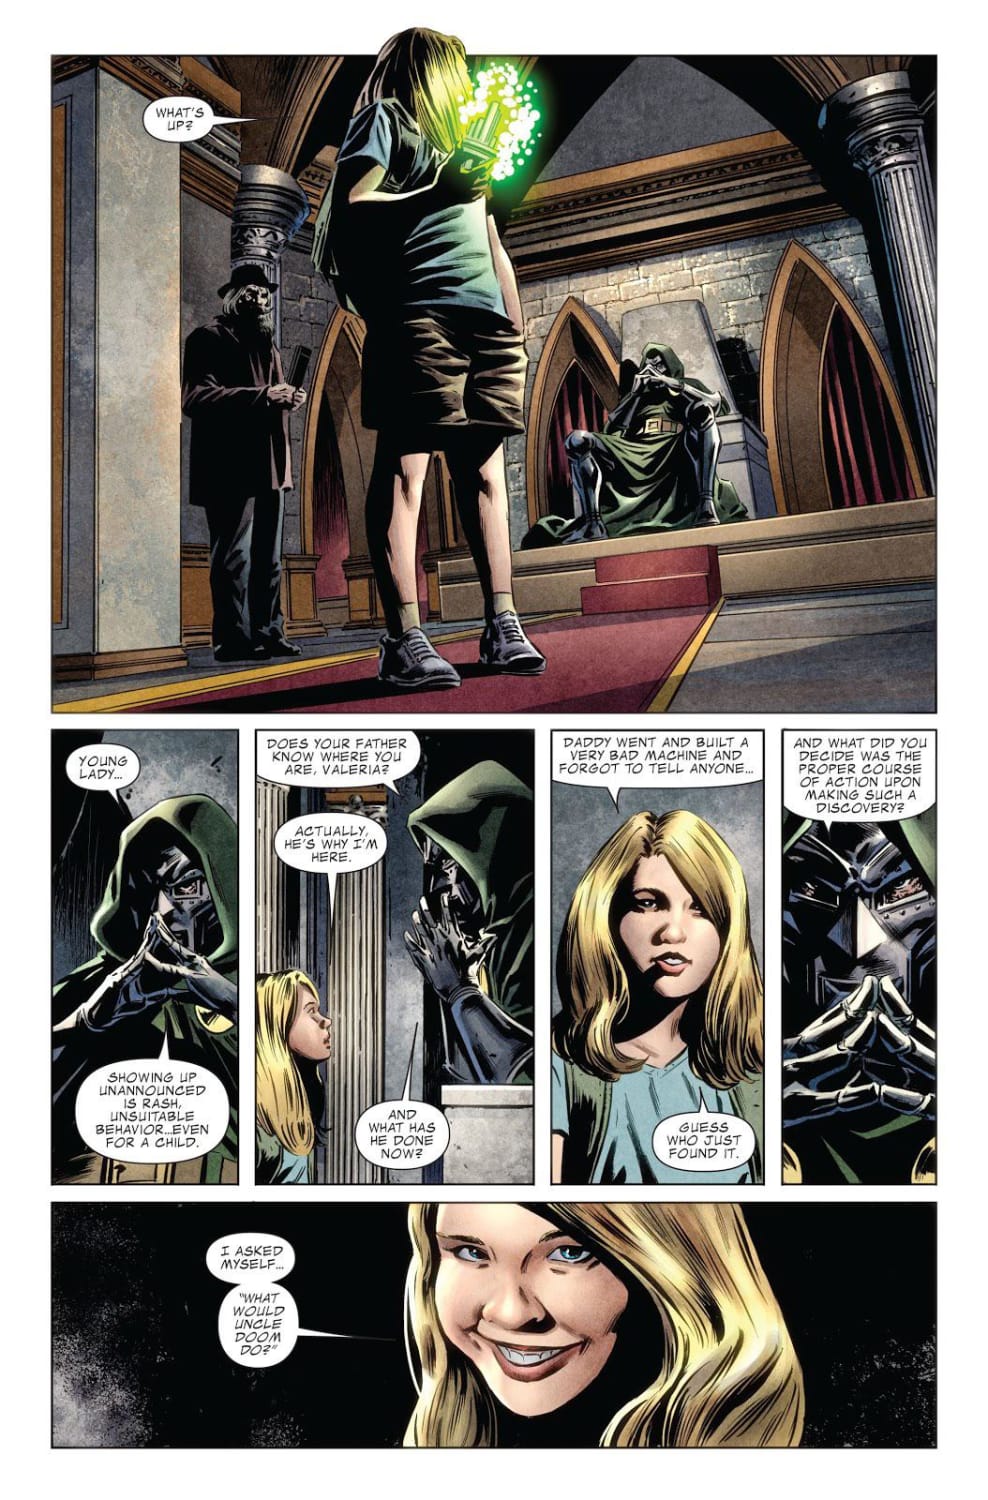 My favorite relationship in Marvel is between Valeria Richards Storm and Dr. DOOM